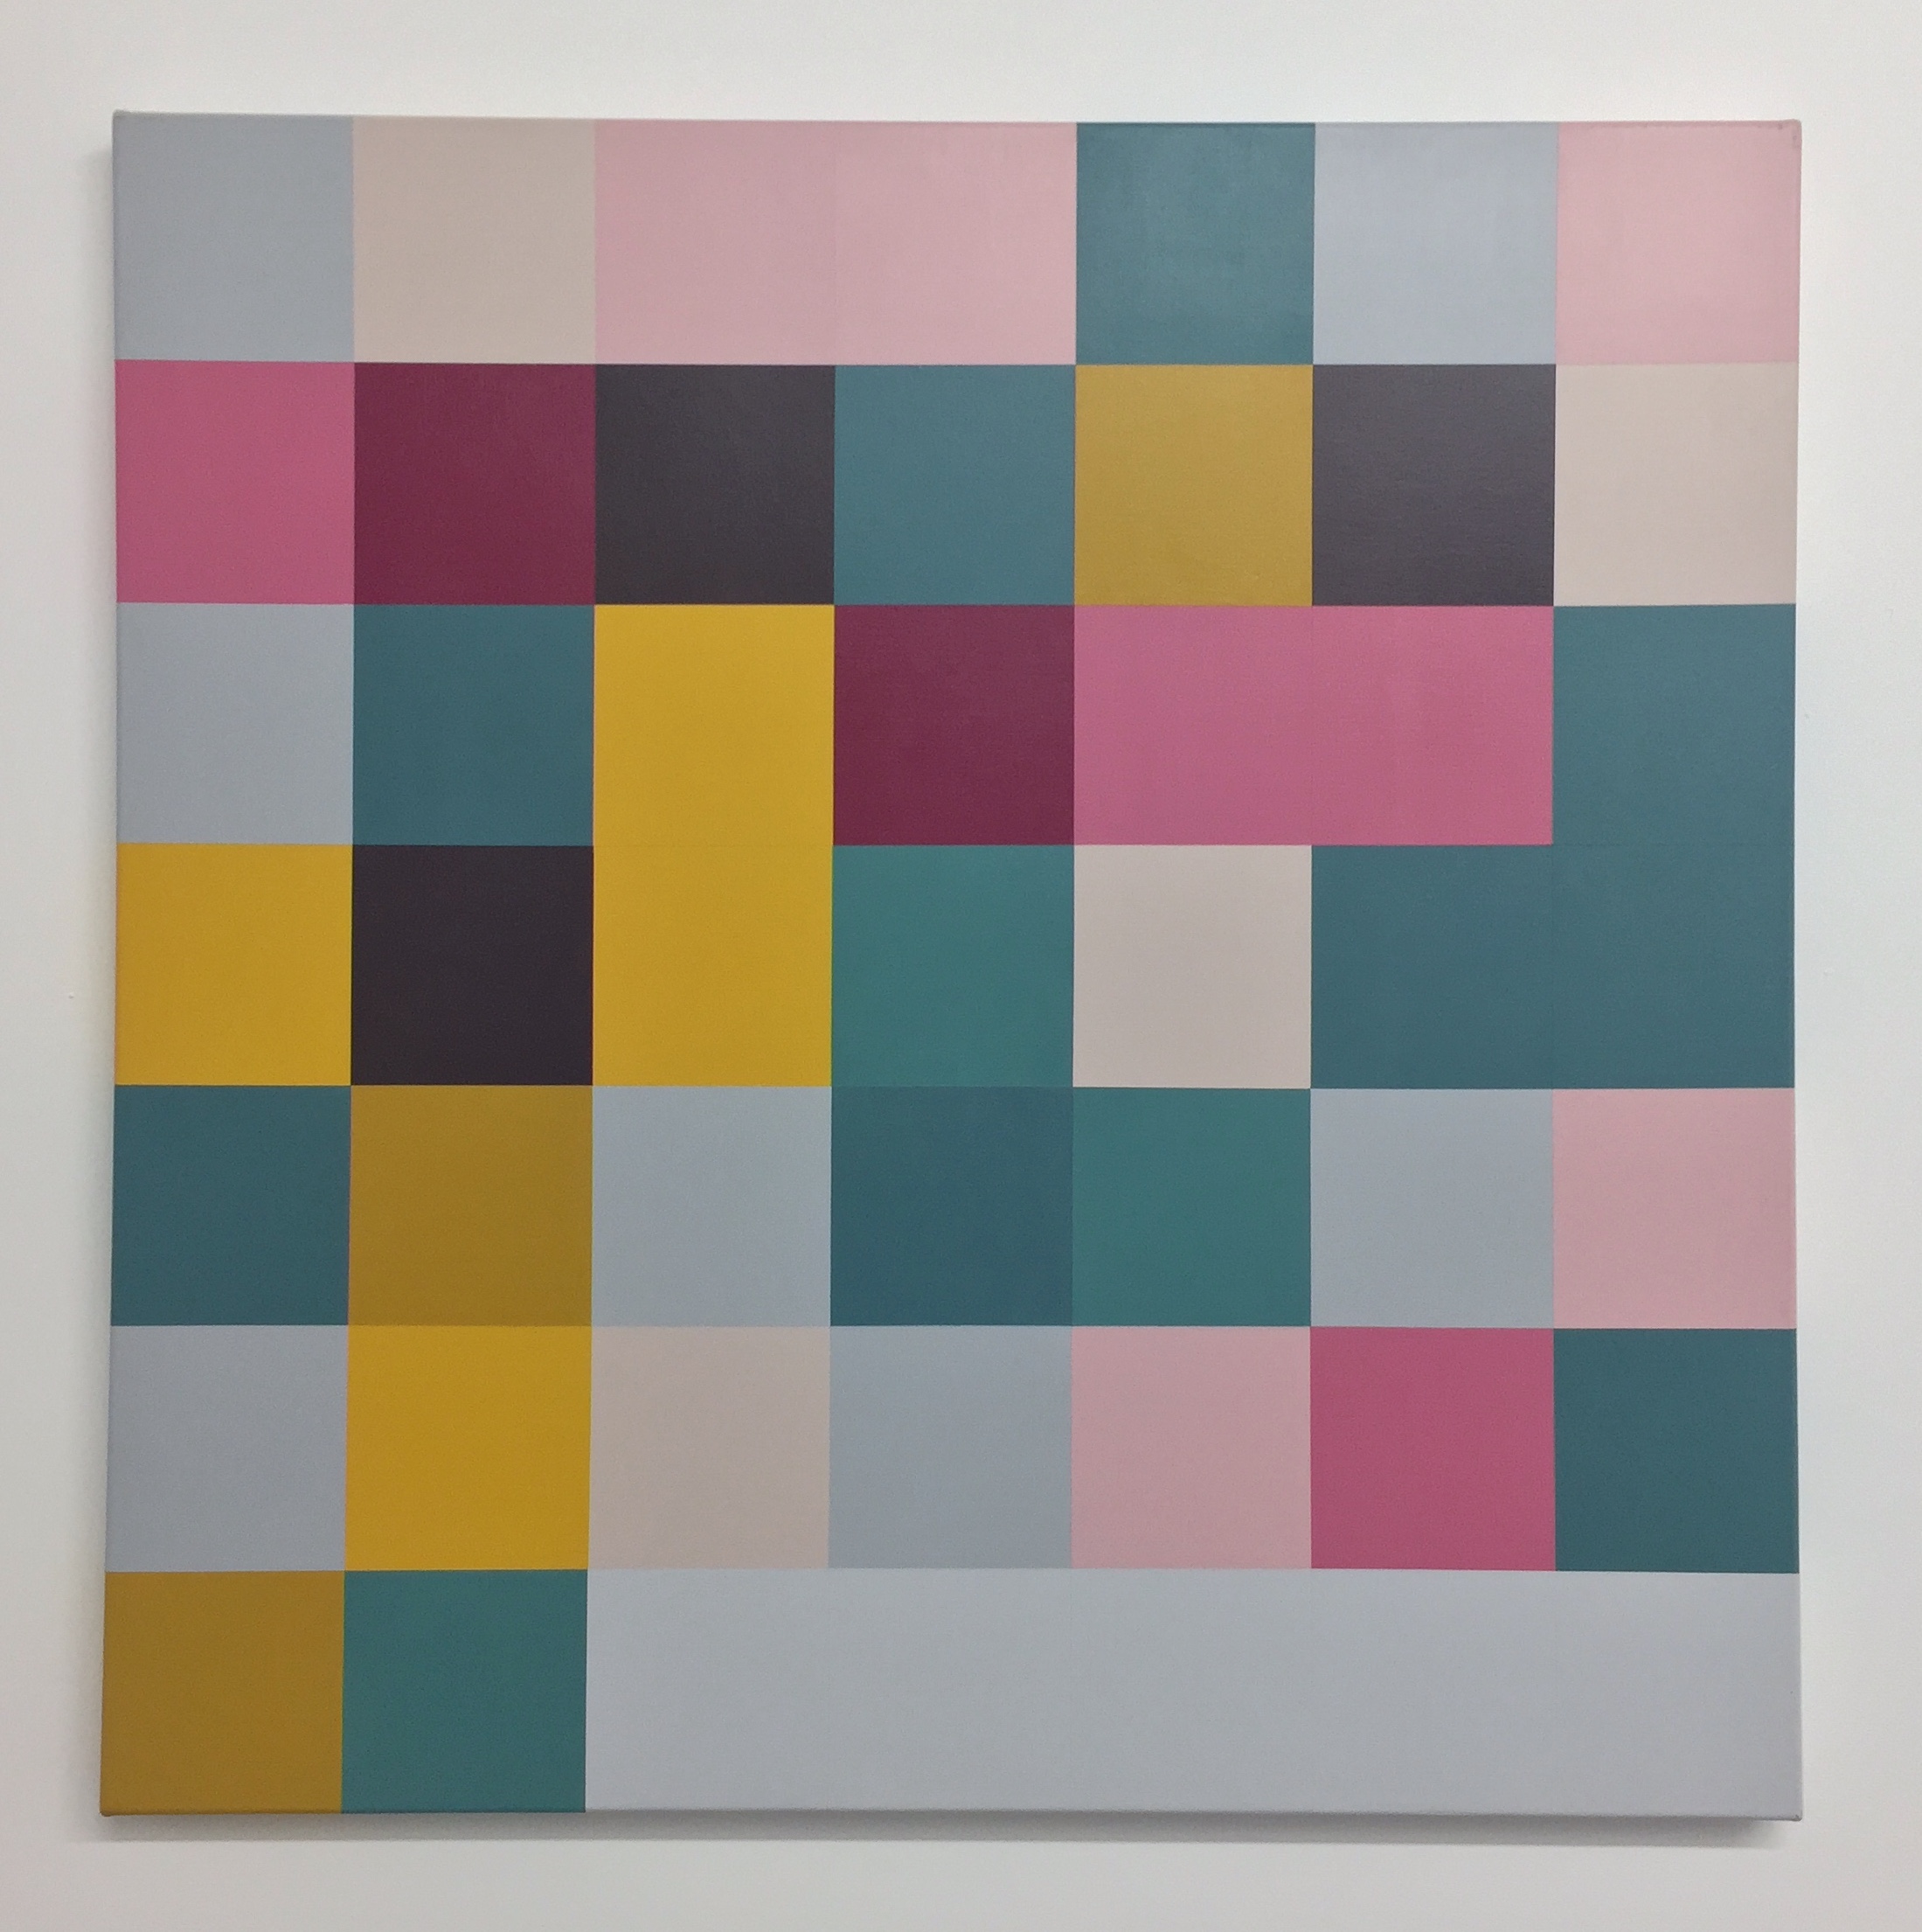  Kristin McIver  Cameron McIver , 2015 acrylic on canvas 36 x 36 in (91.4 x 91.4 cm) 